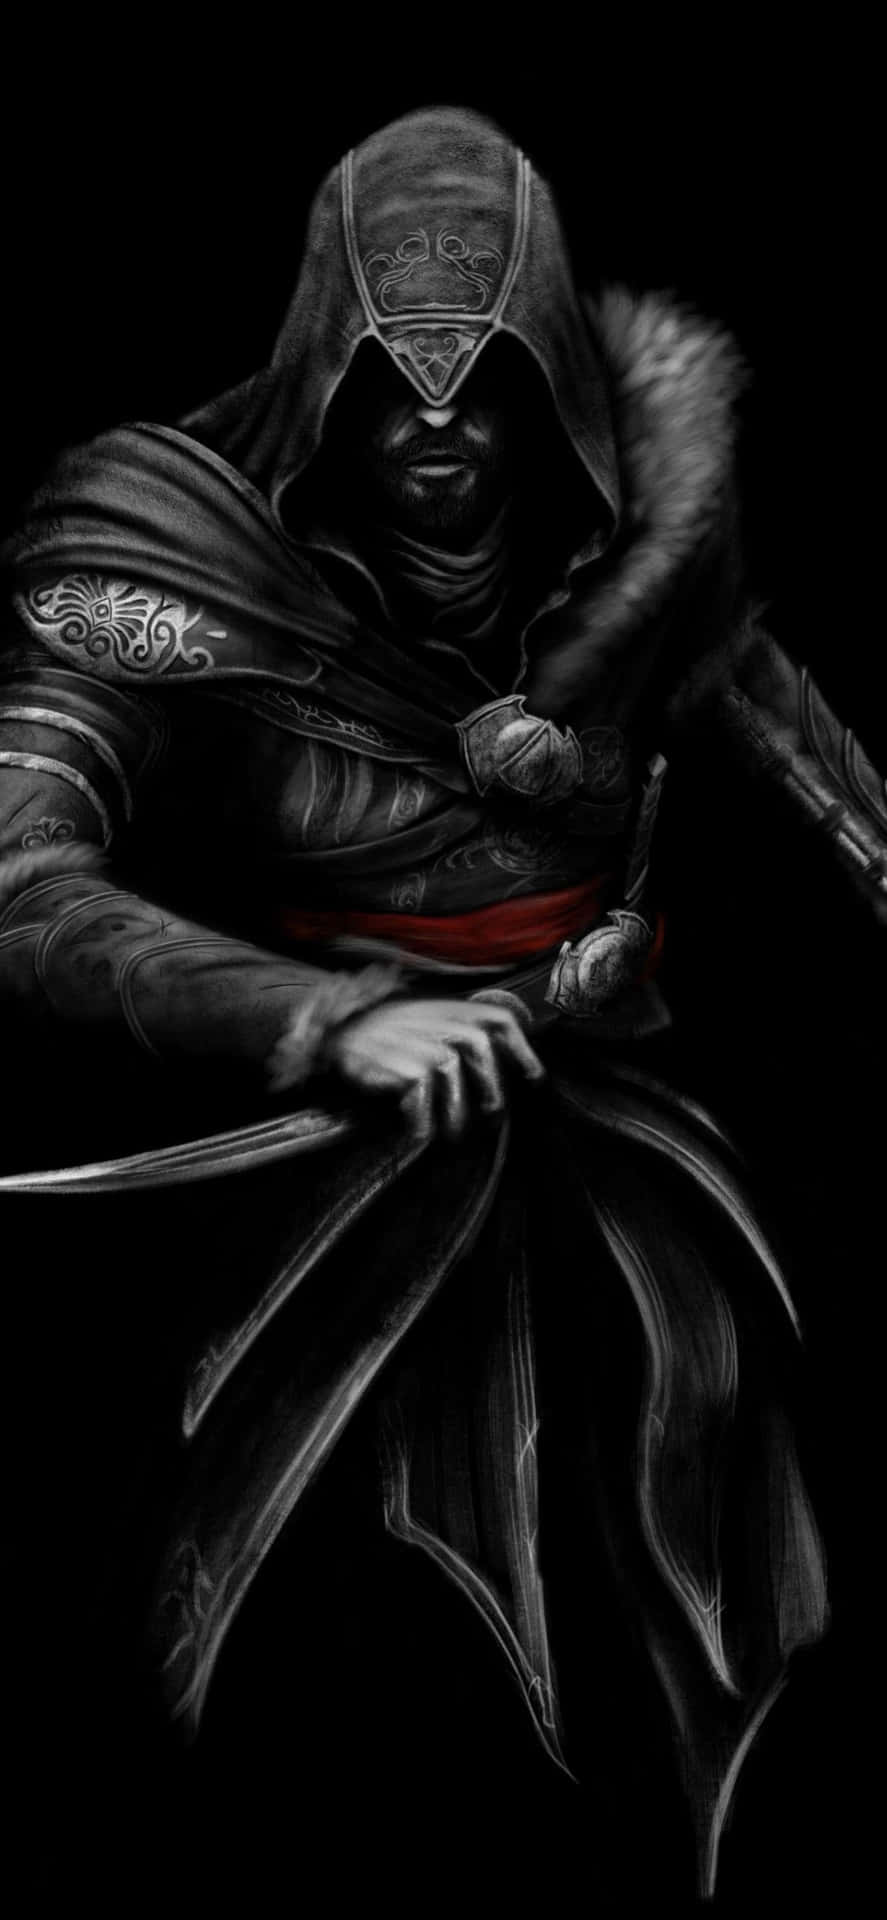 Ezio Auditore - Master Assassin of Renaissance Italy Wallpaper